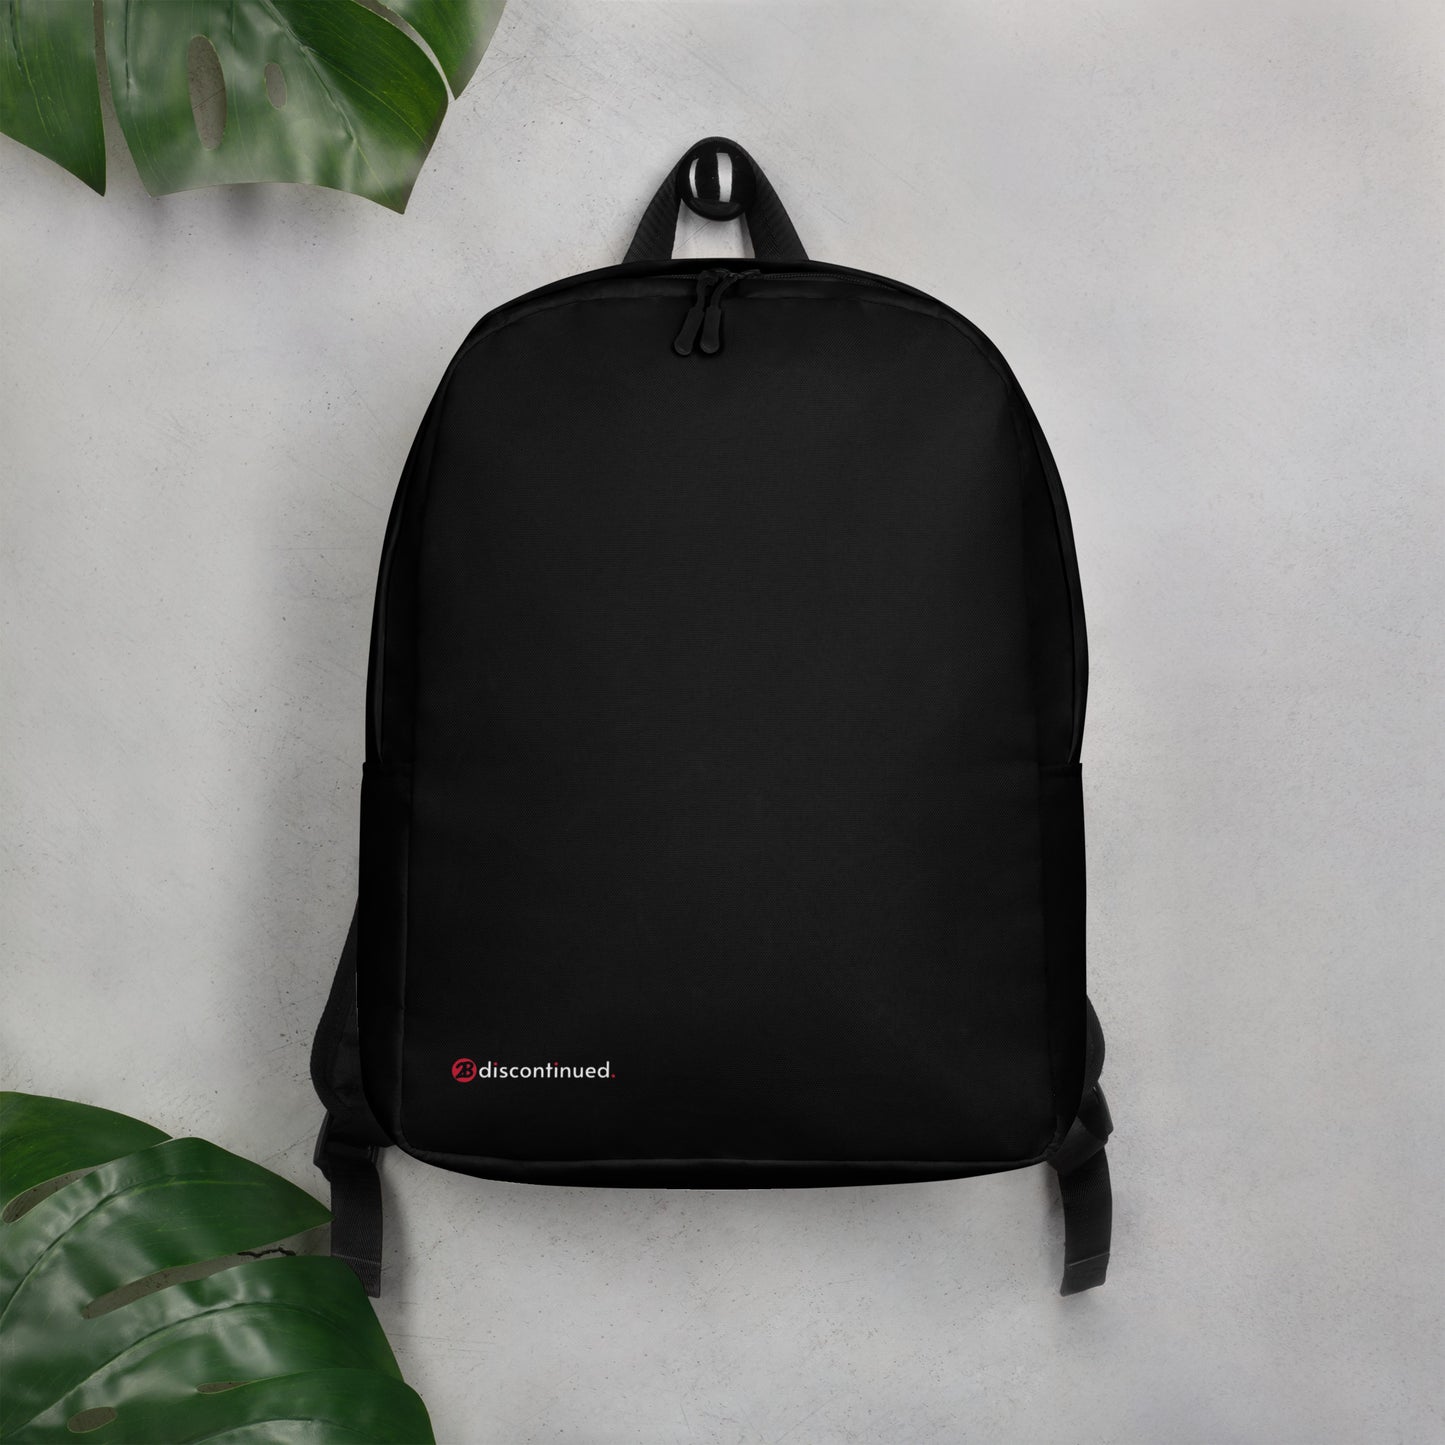 2Bdiscontinued. minimalist backpack blk